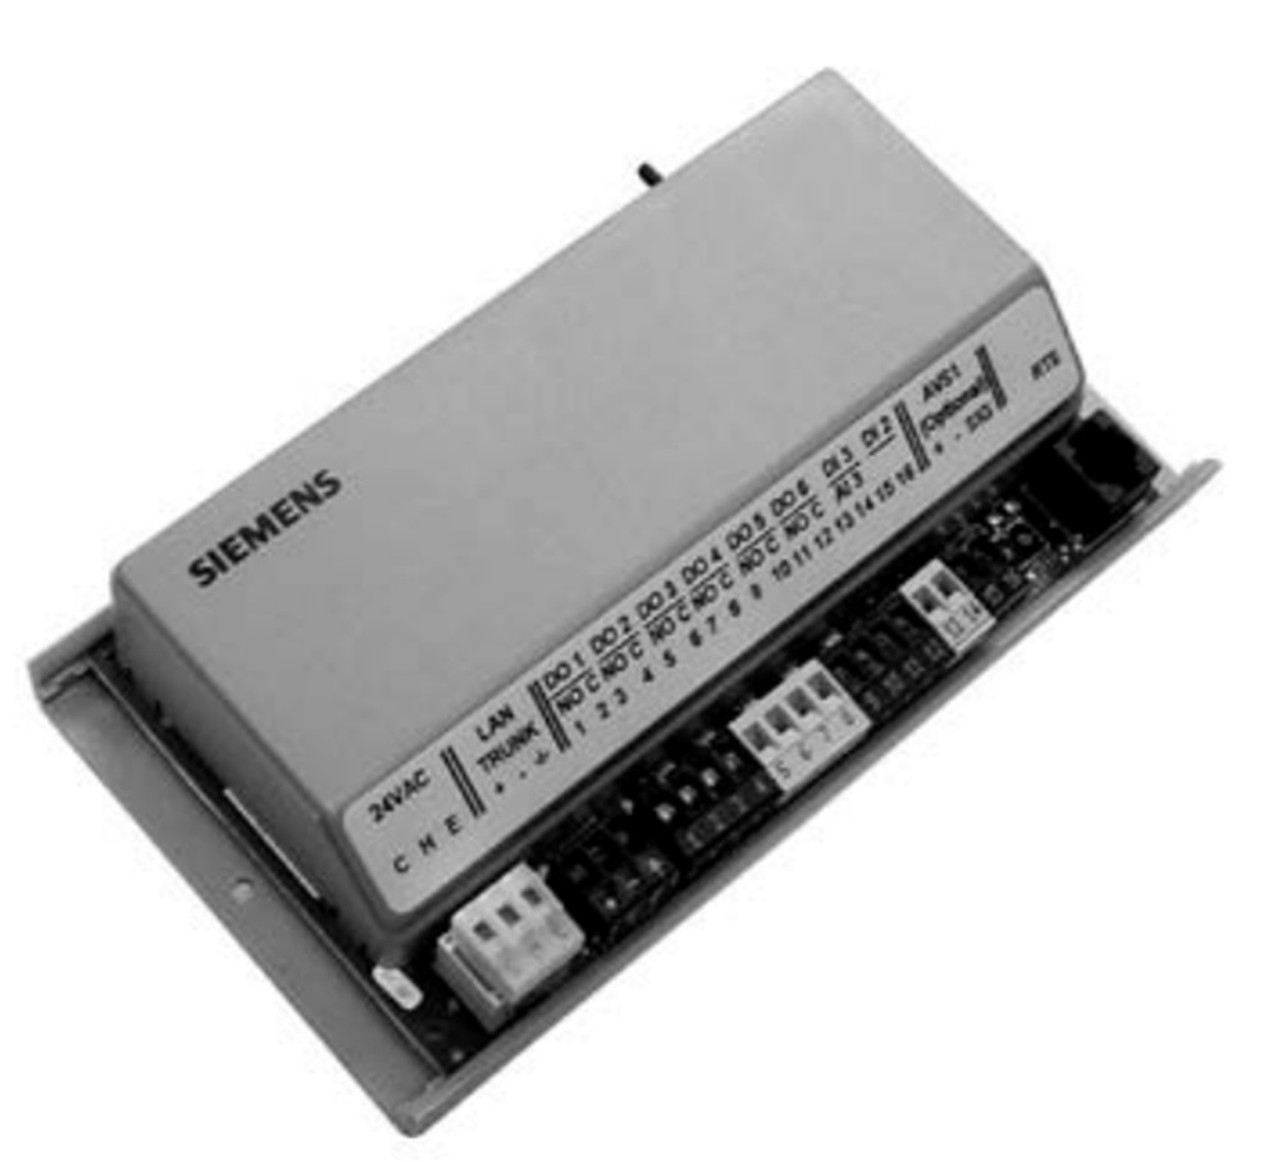 Siemens 550-432PA BACnet PTEC Terminal Box (VAV) Controller [New]